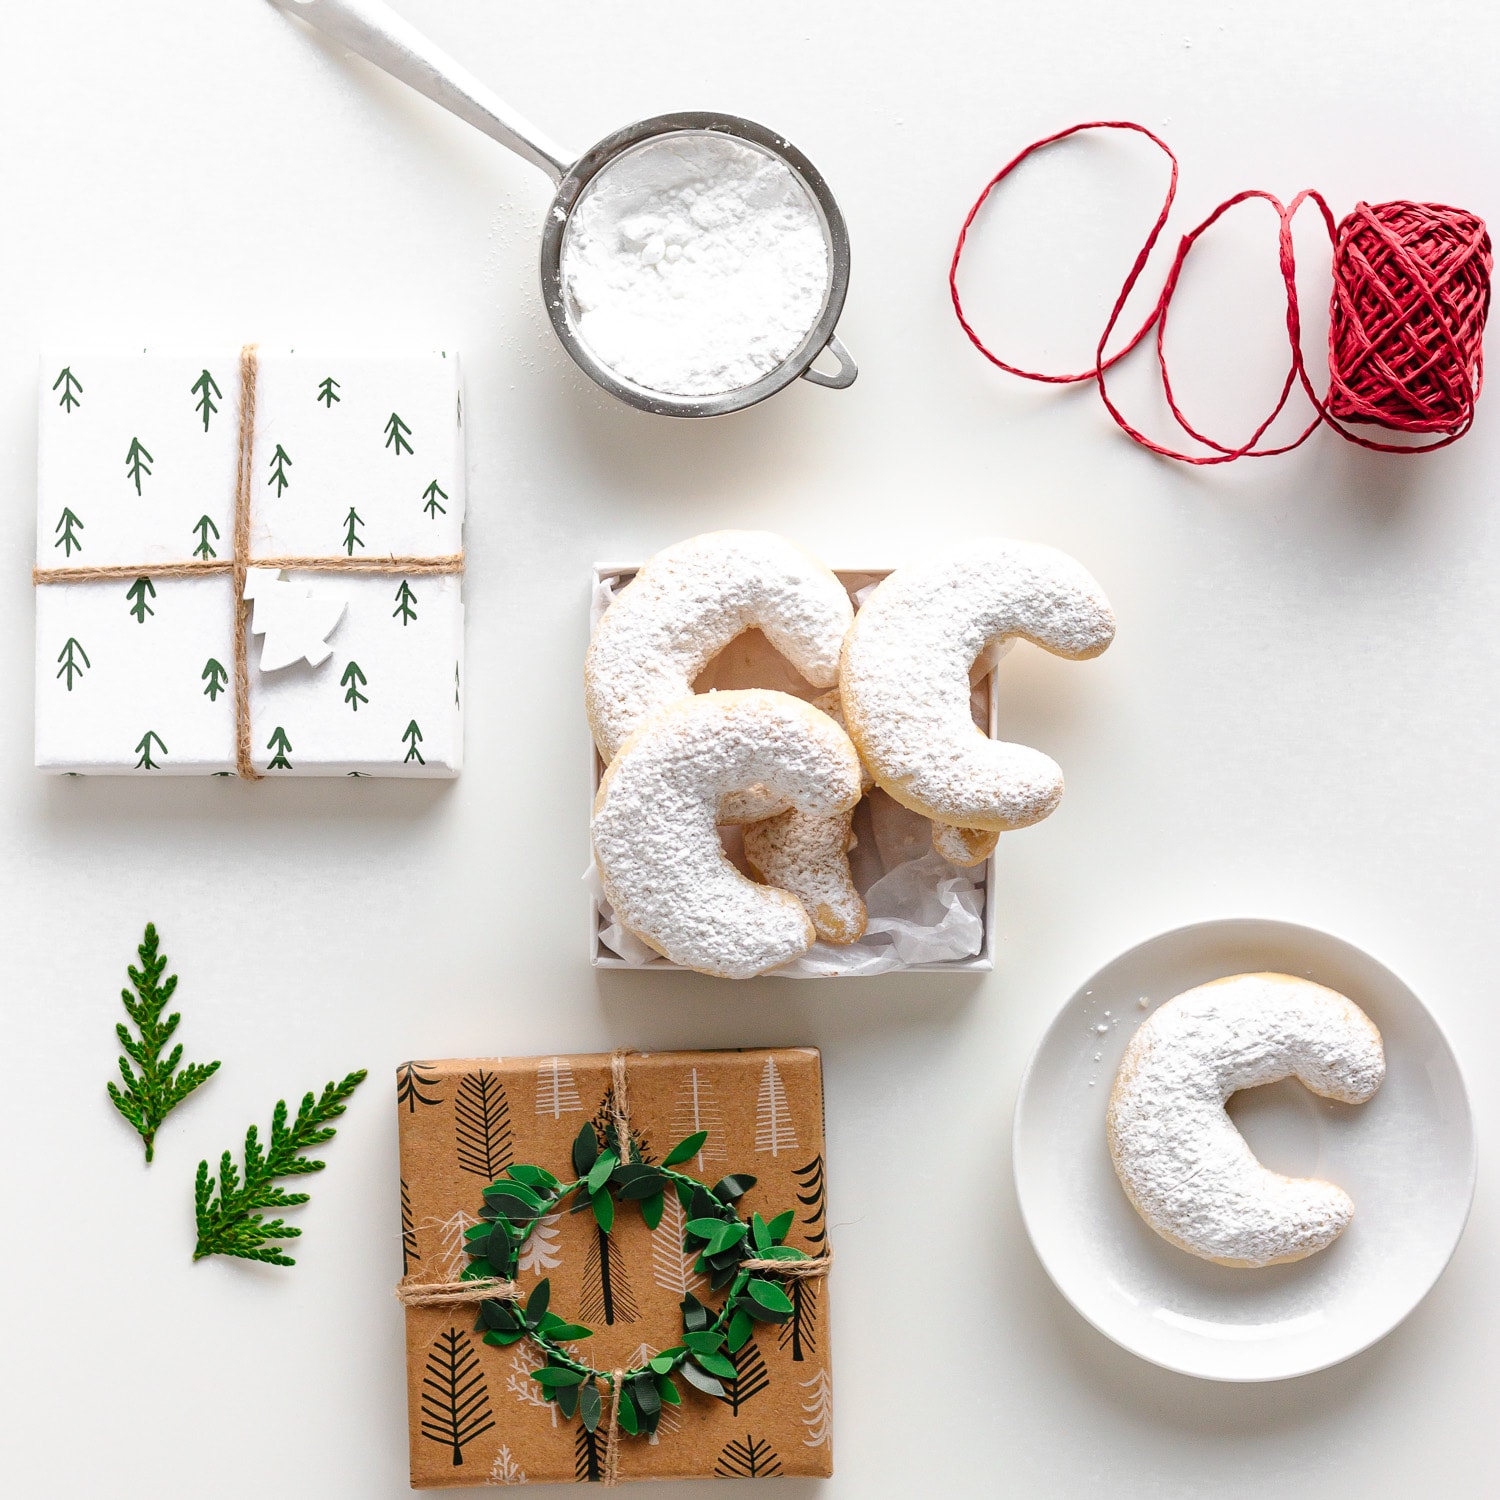 Christmas themed overlay featuring Vanillekipferln (crescent cookies).